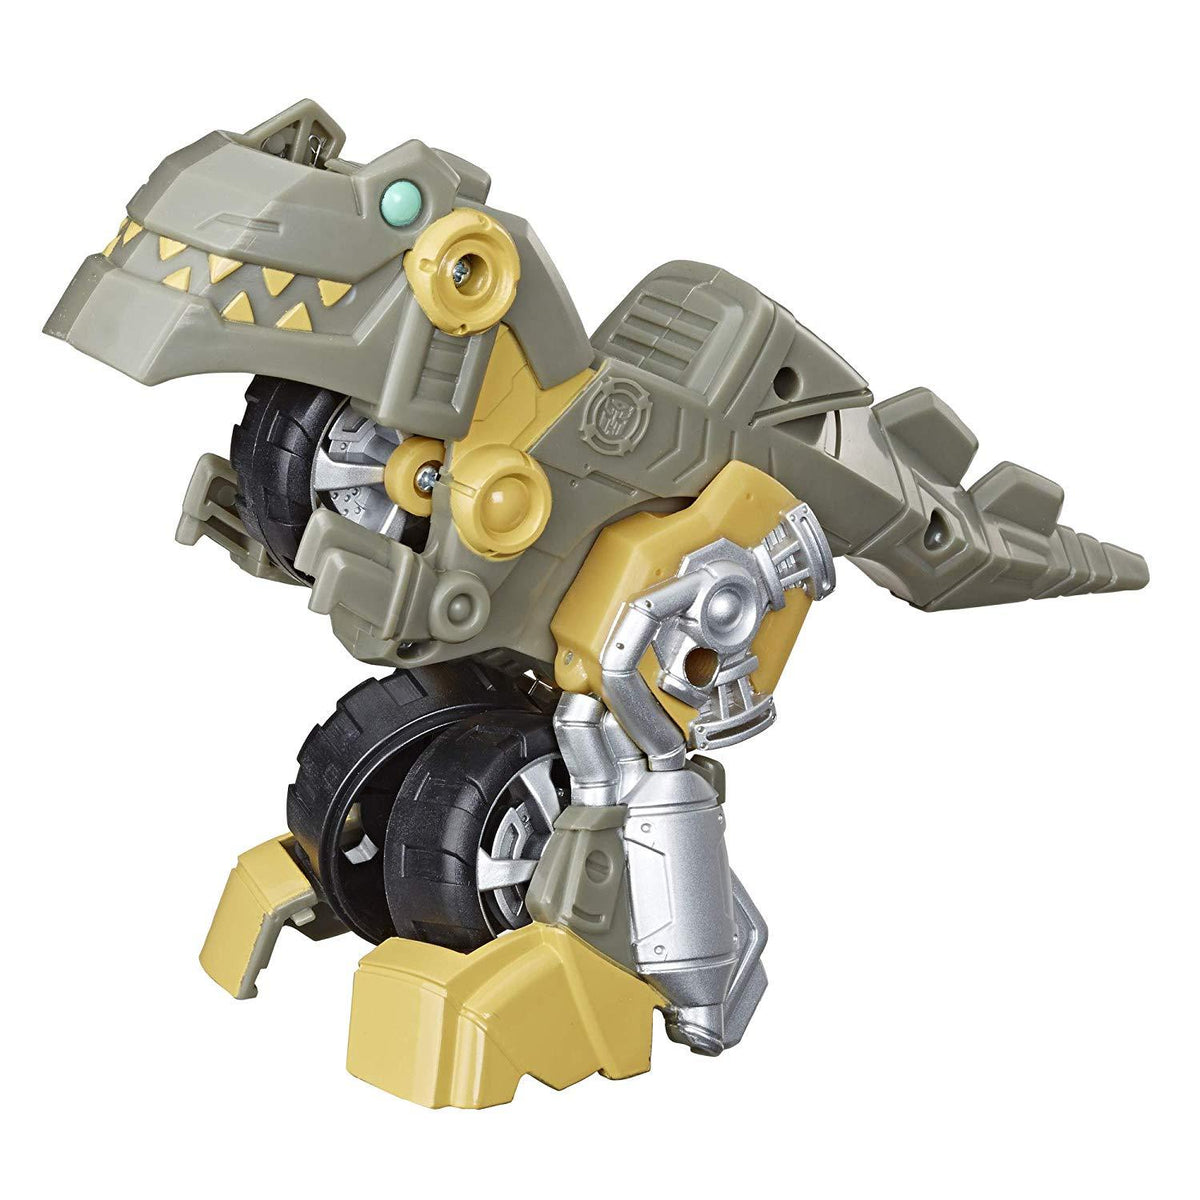 Buy Transformers Rescue Bots Academy Grimlock Rescan Series Toy